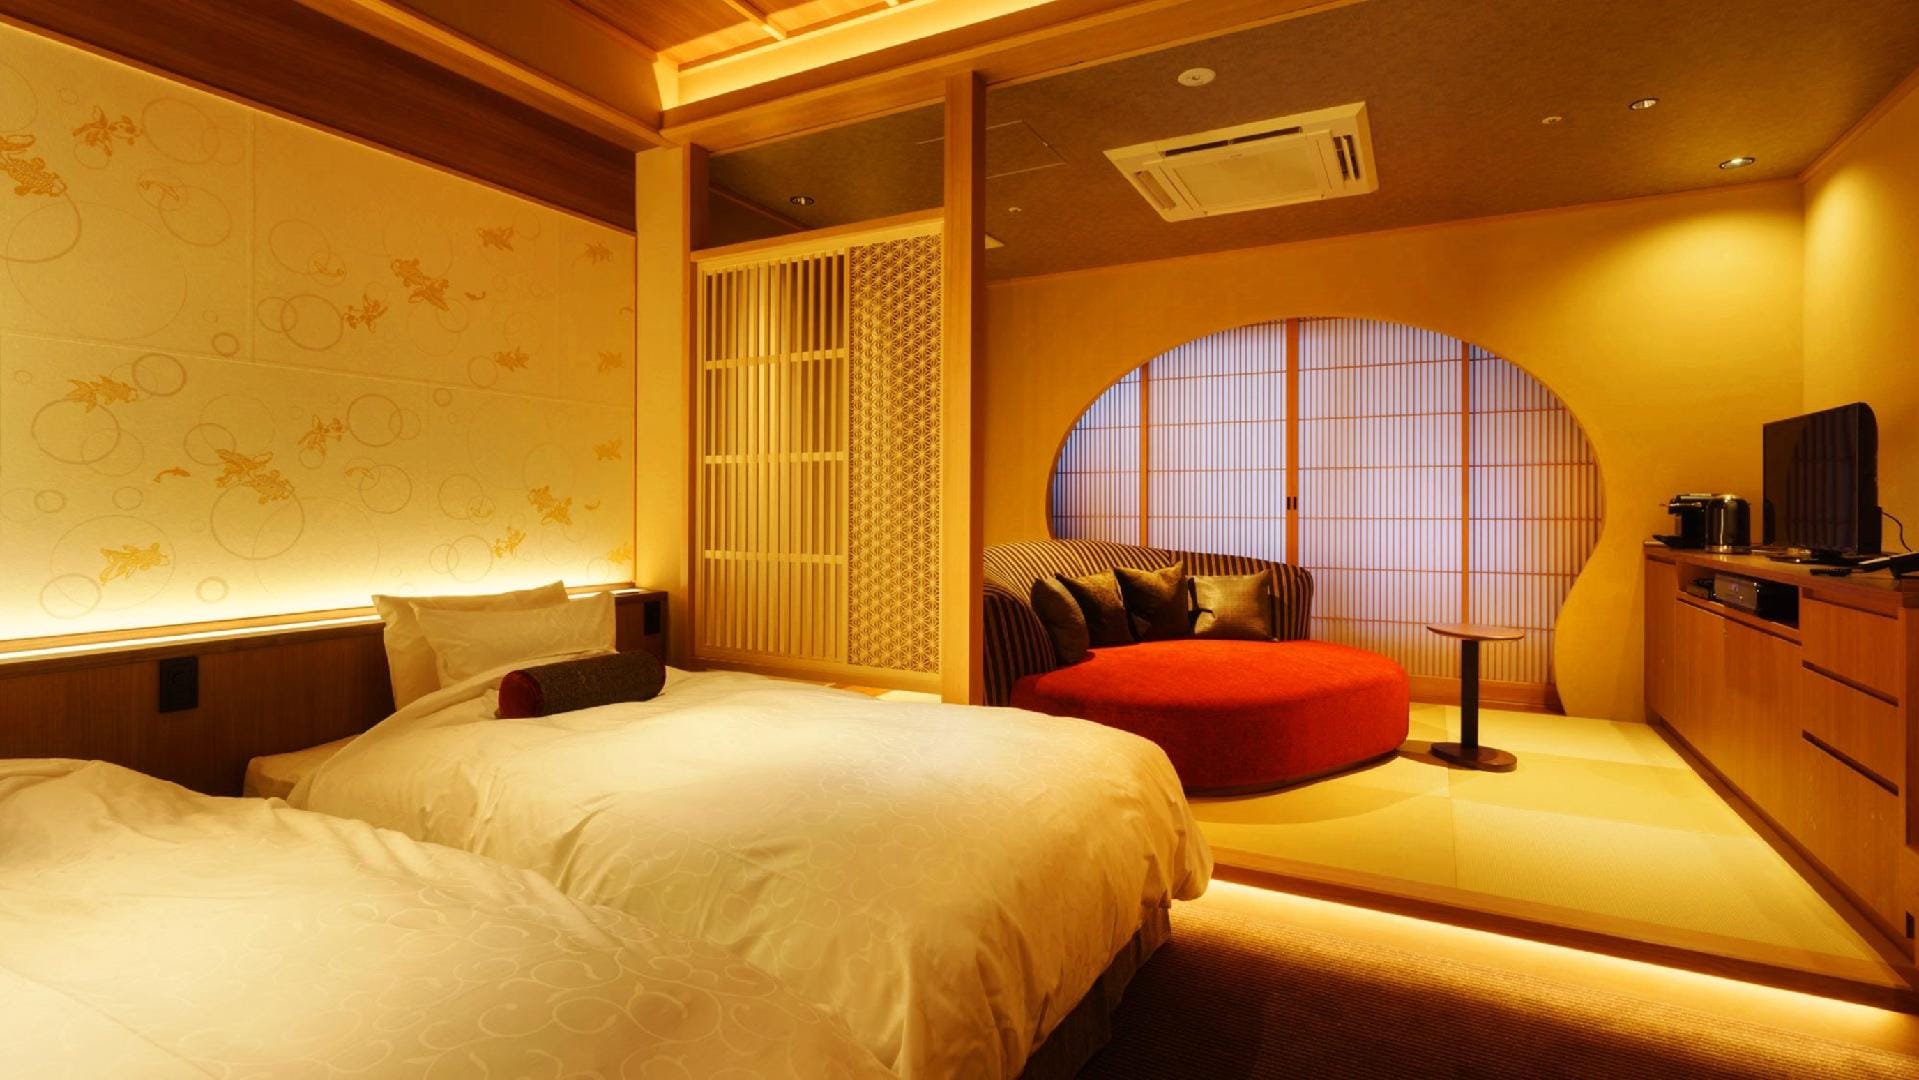 Kamar tamu modern Jepang tipe C